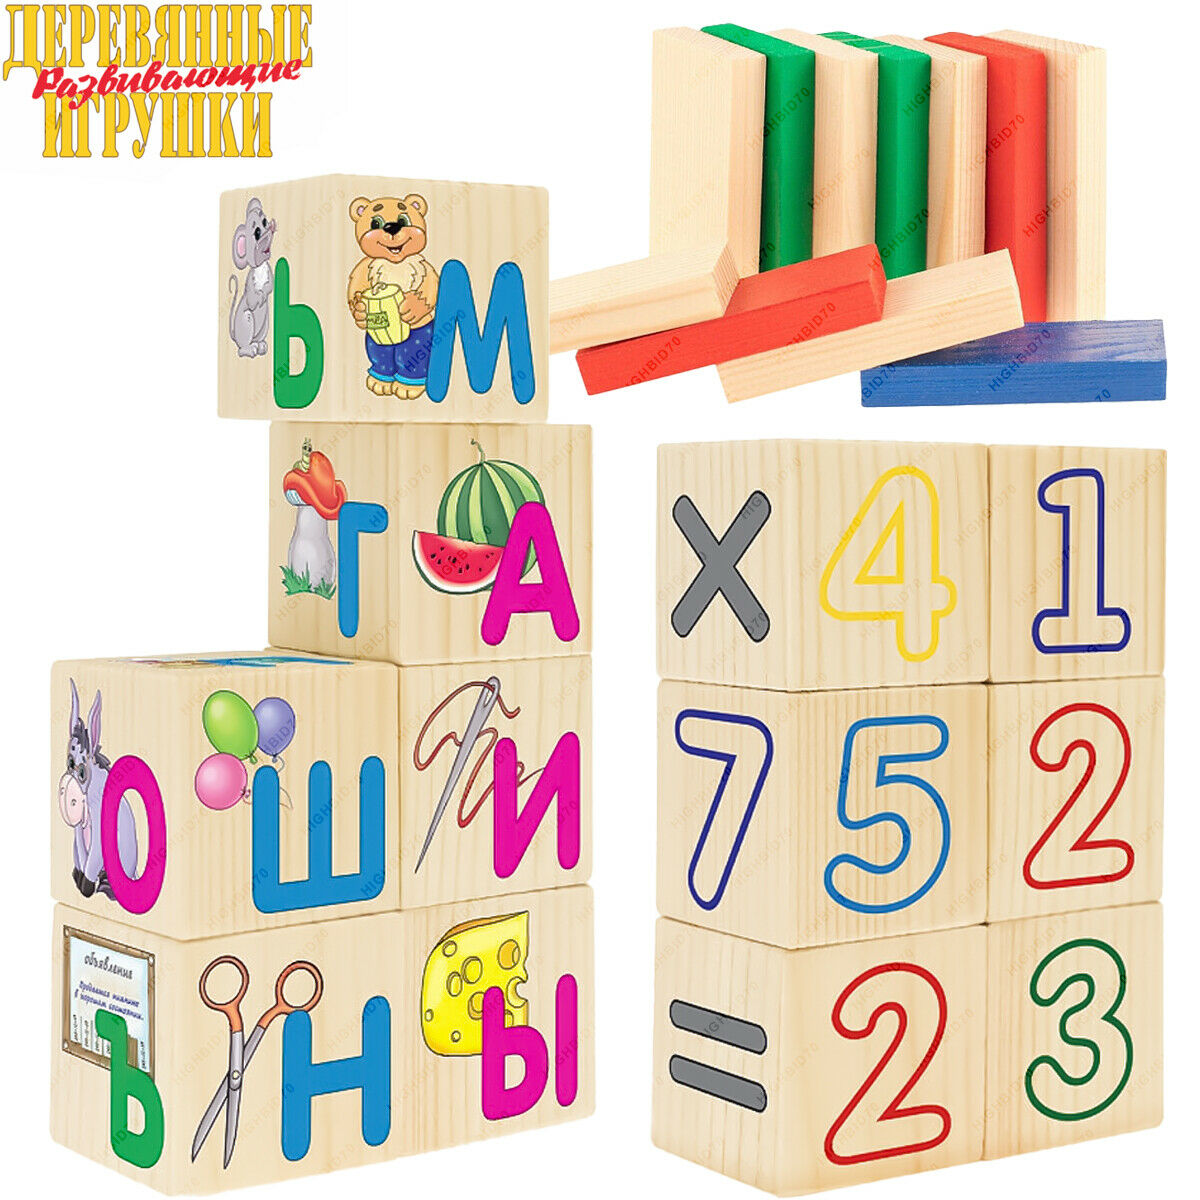 Andante Azbuka & Mathematics, Wood Building Blocks, Abc, Russian Alphabet, 24 Pc